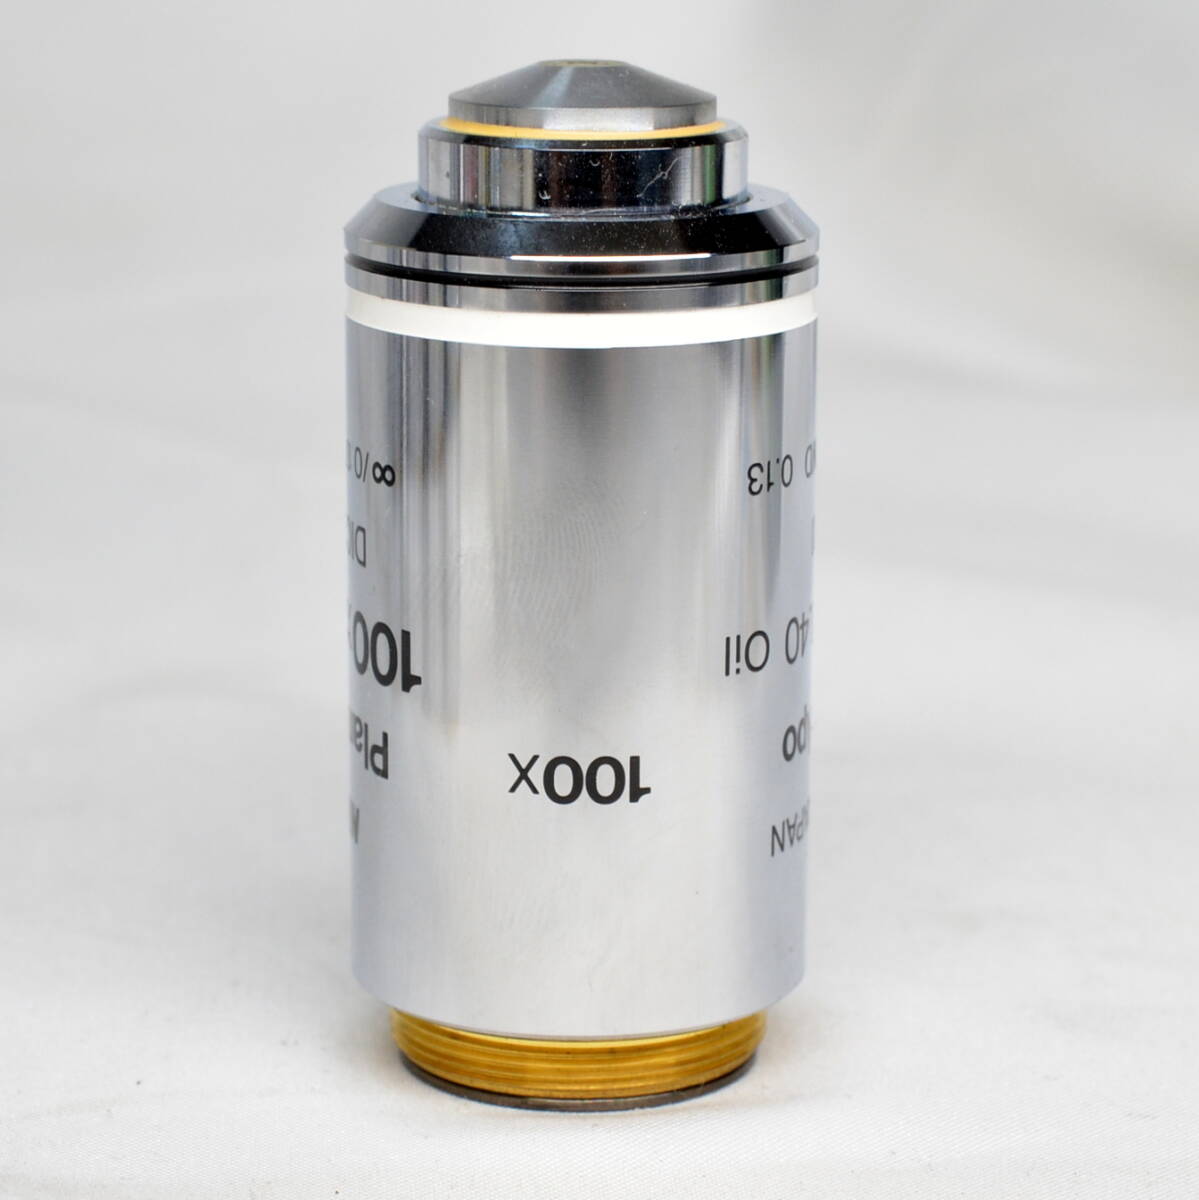 Nikon Plan Apo 100*1.40 Oil DIC H ∞/ 0.17 WD 0.13 顕微鏡 ニコン 対物レンズ 未清掃 未整備 現状優先の画像4